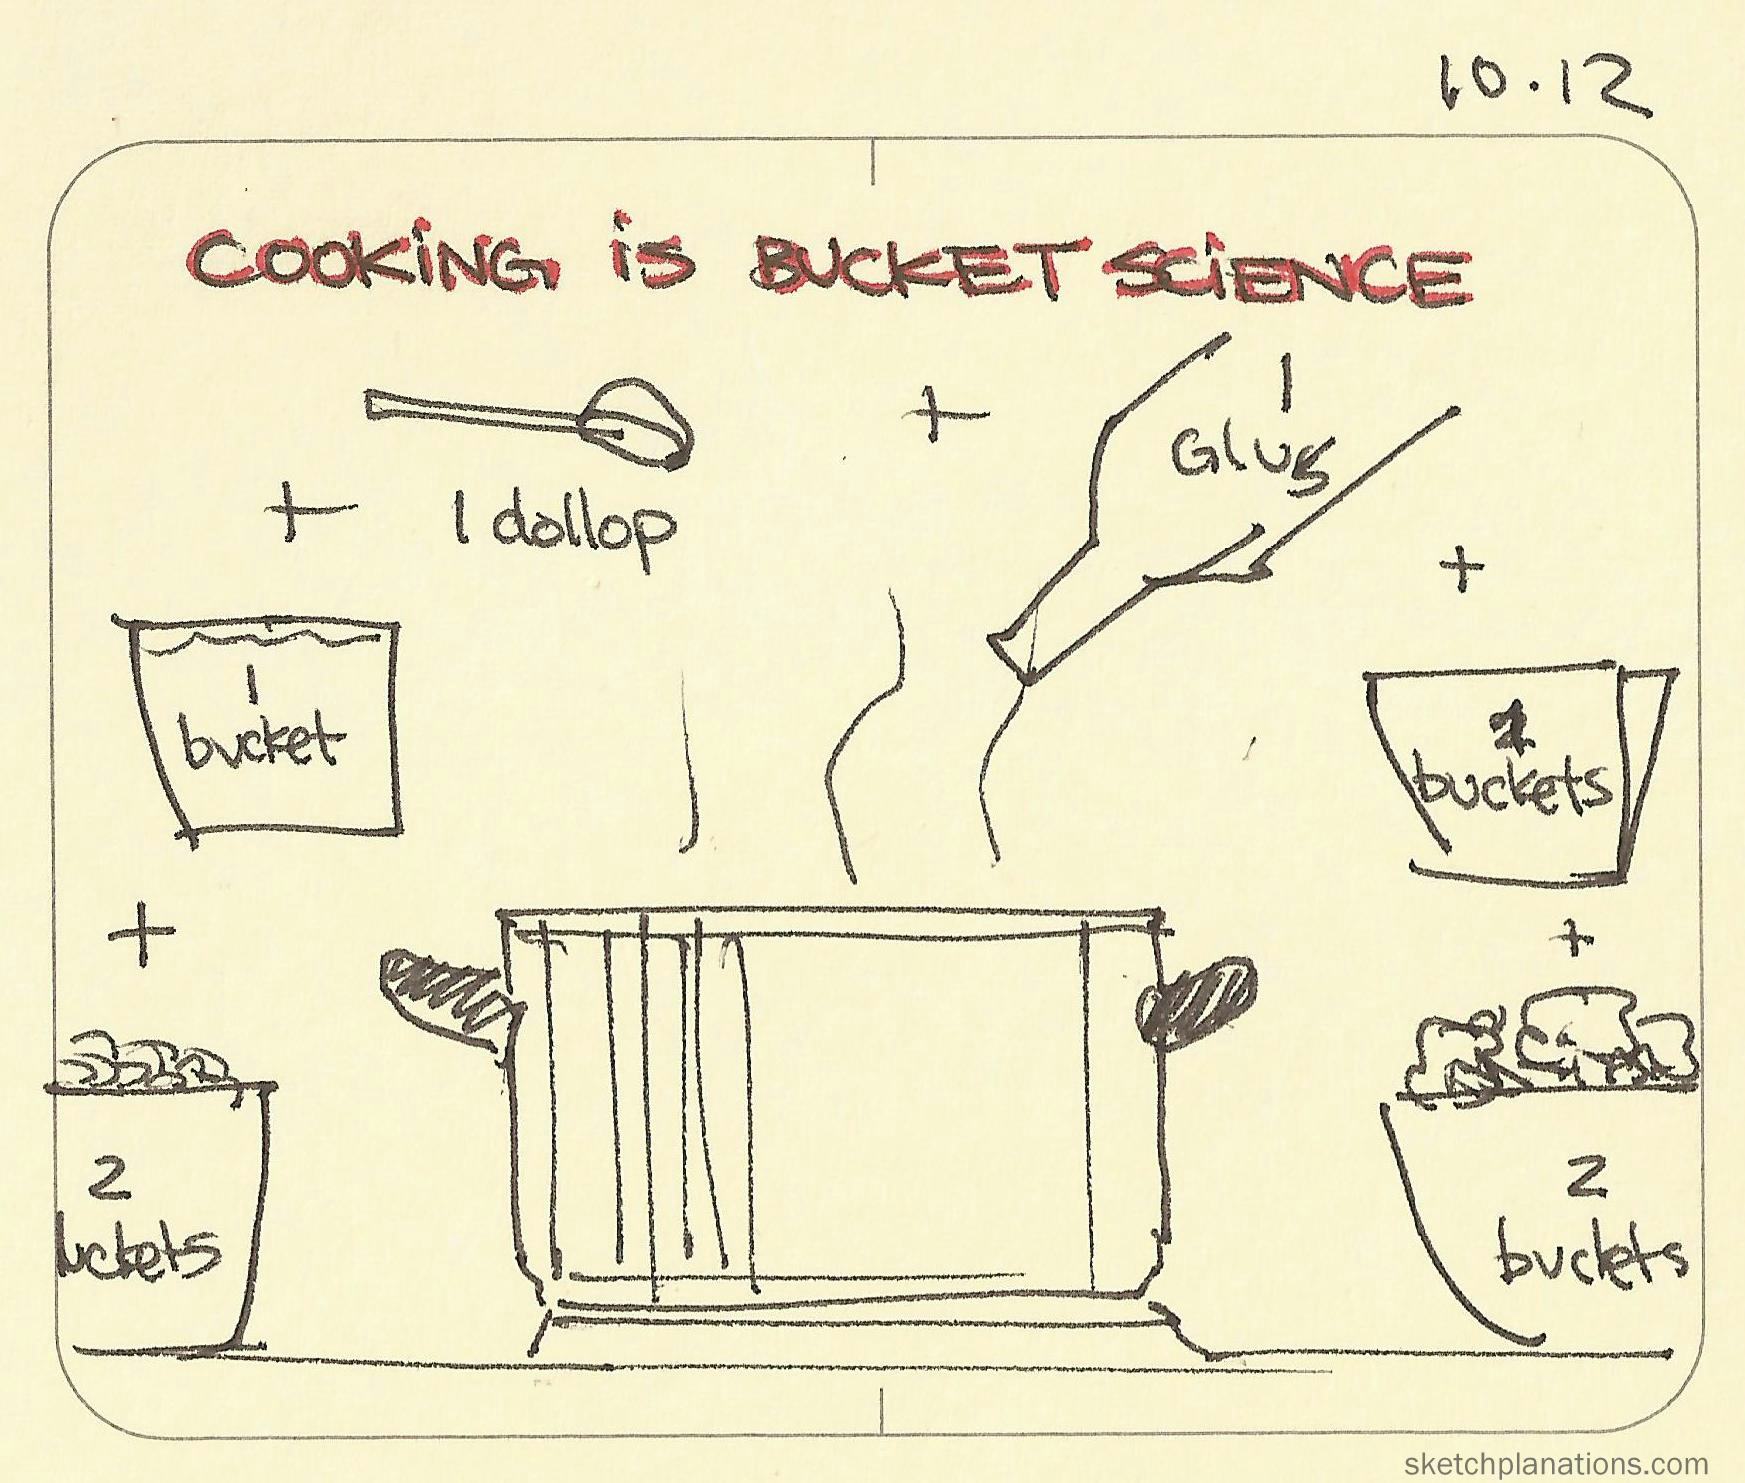 Cooking is bucket science - Sketchplanations